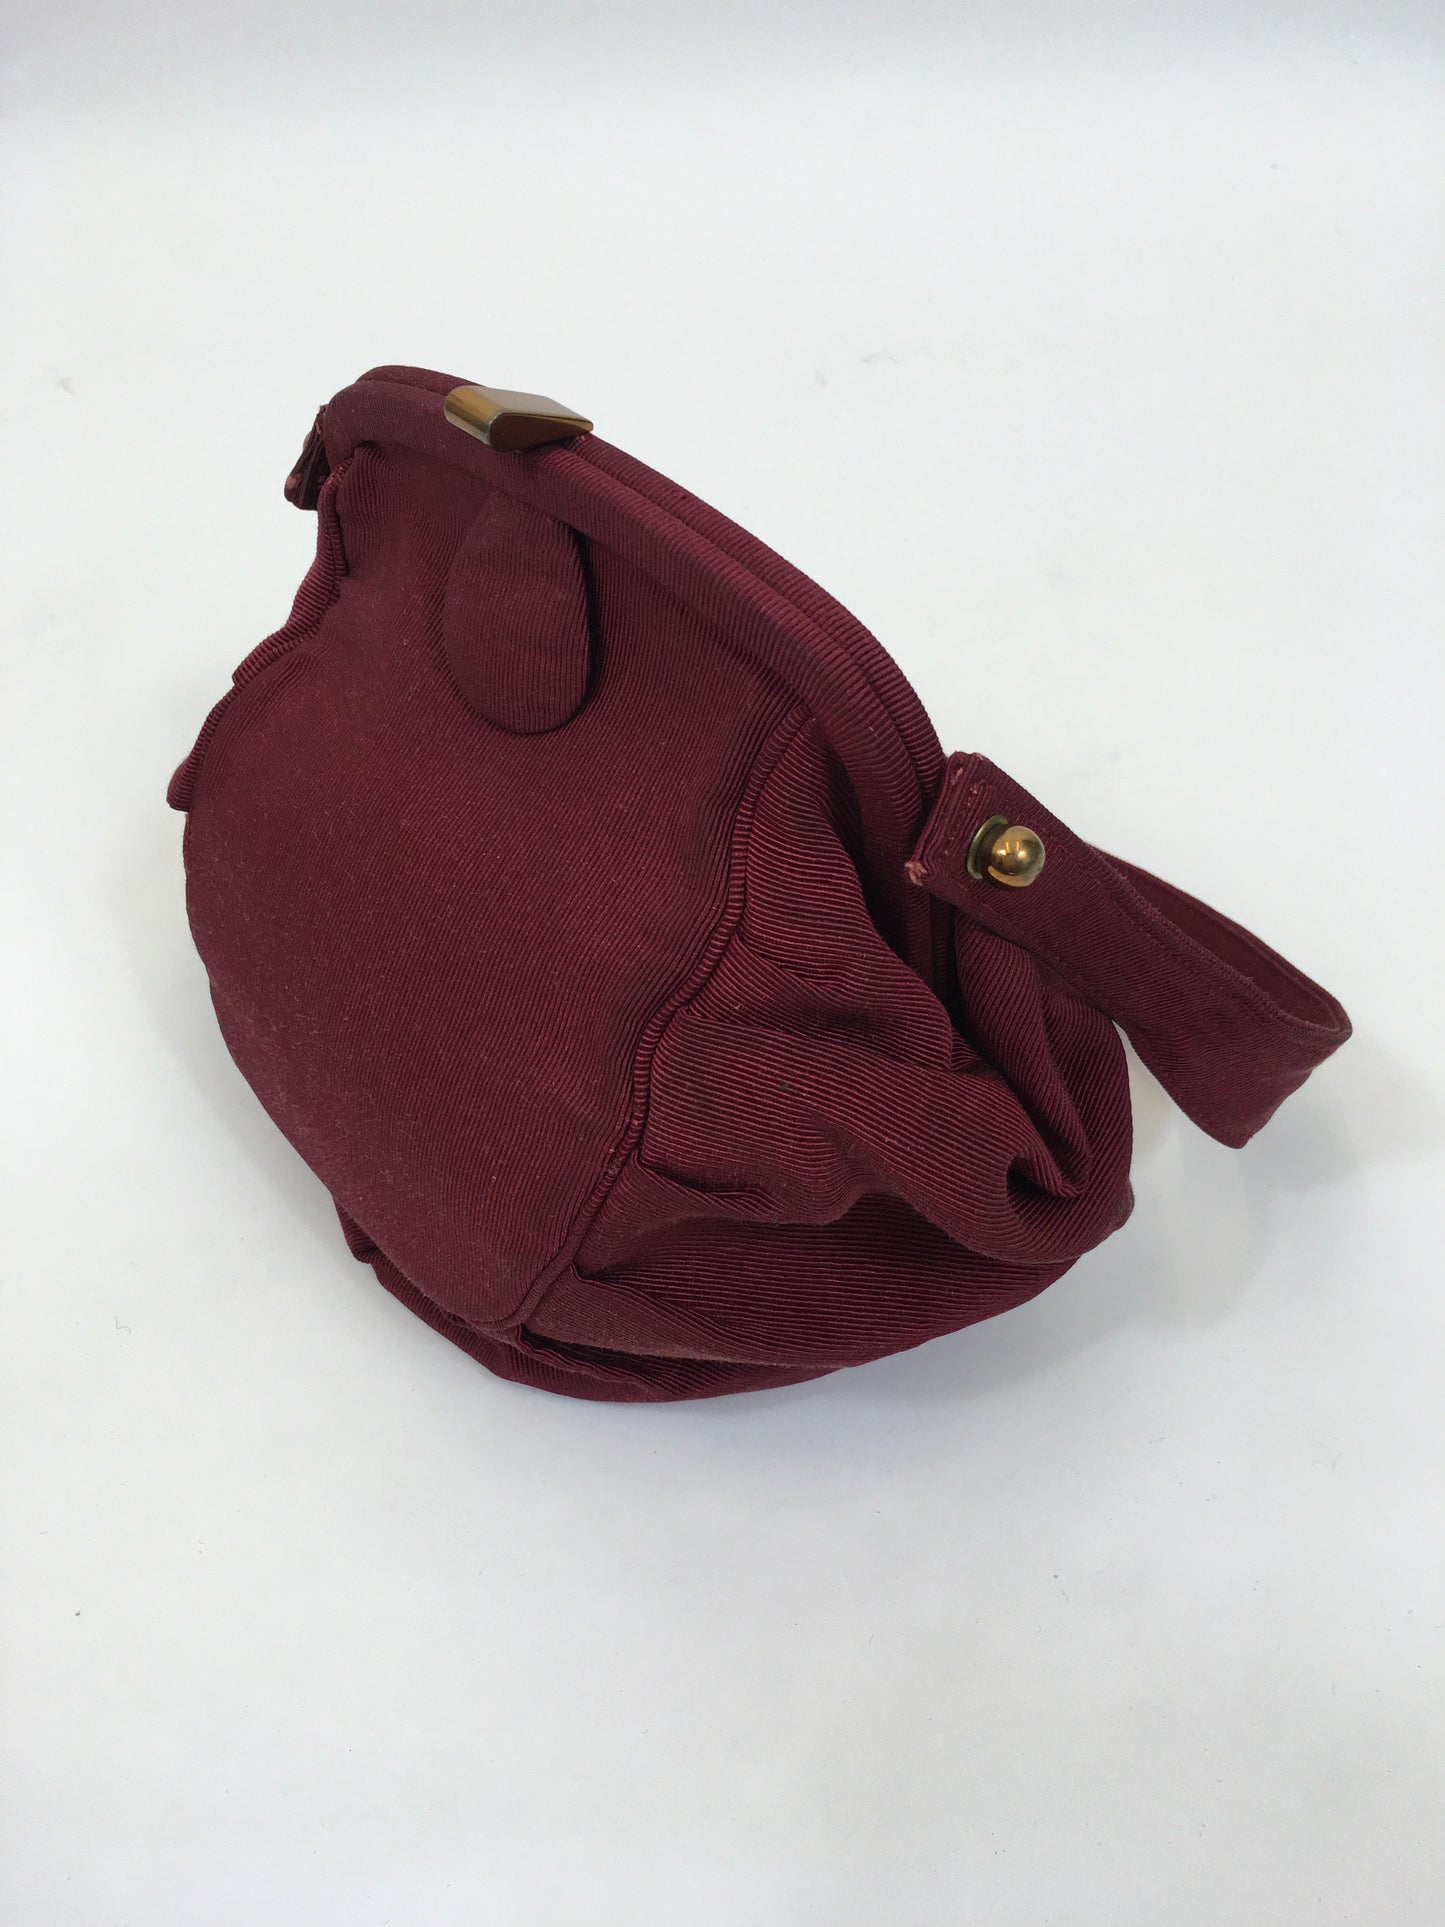 Original 1940's Stunning Grosgrain Handbag - In A Warm Winter Berry